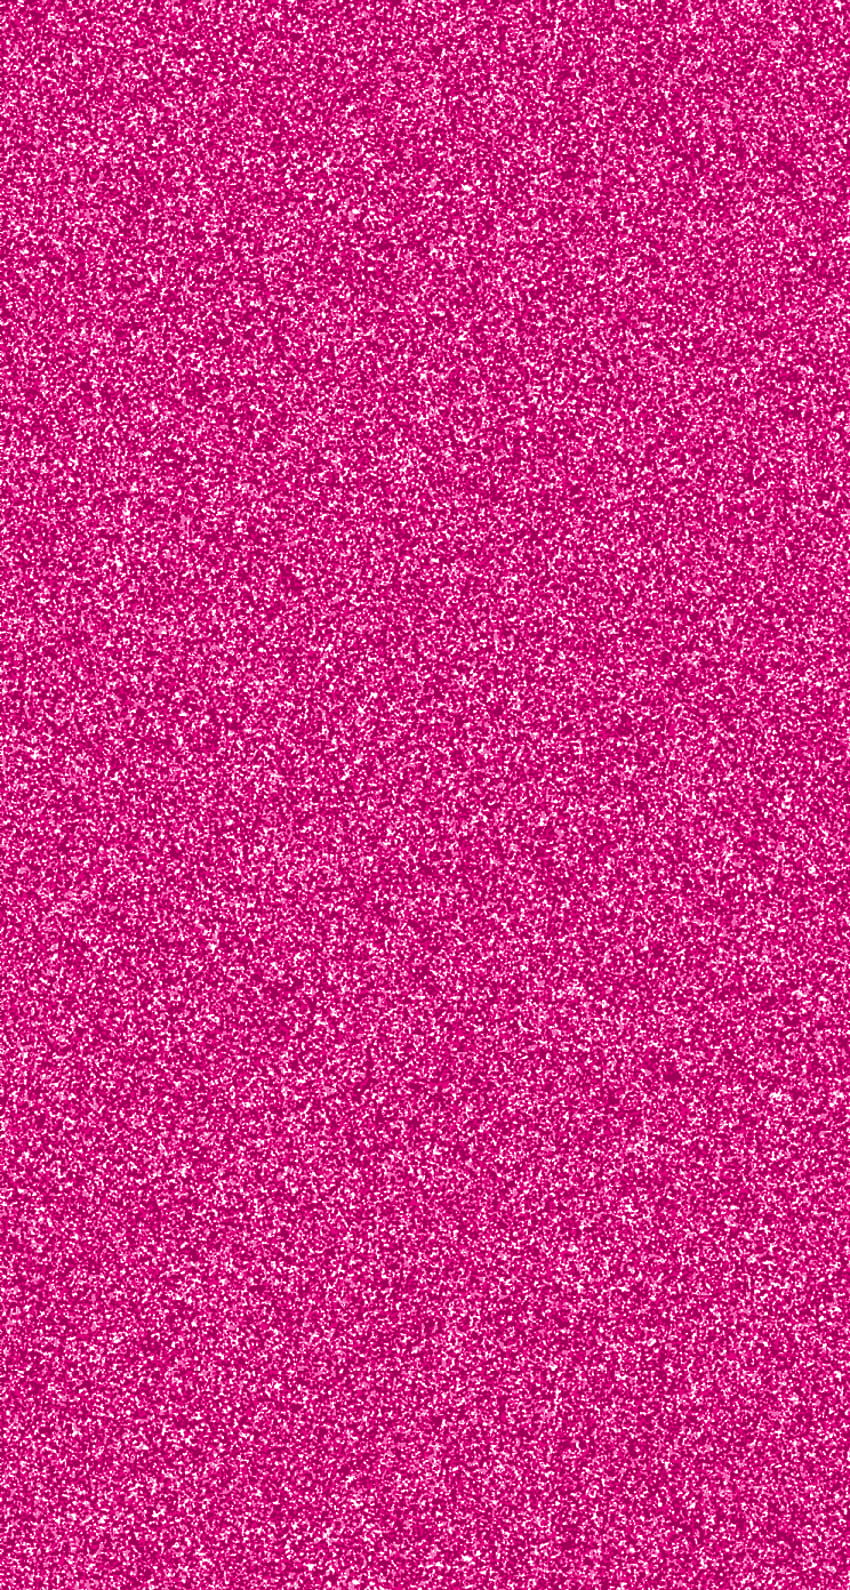 Neon Pink Background Images  Free Download on Freepik